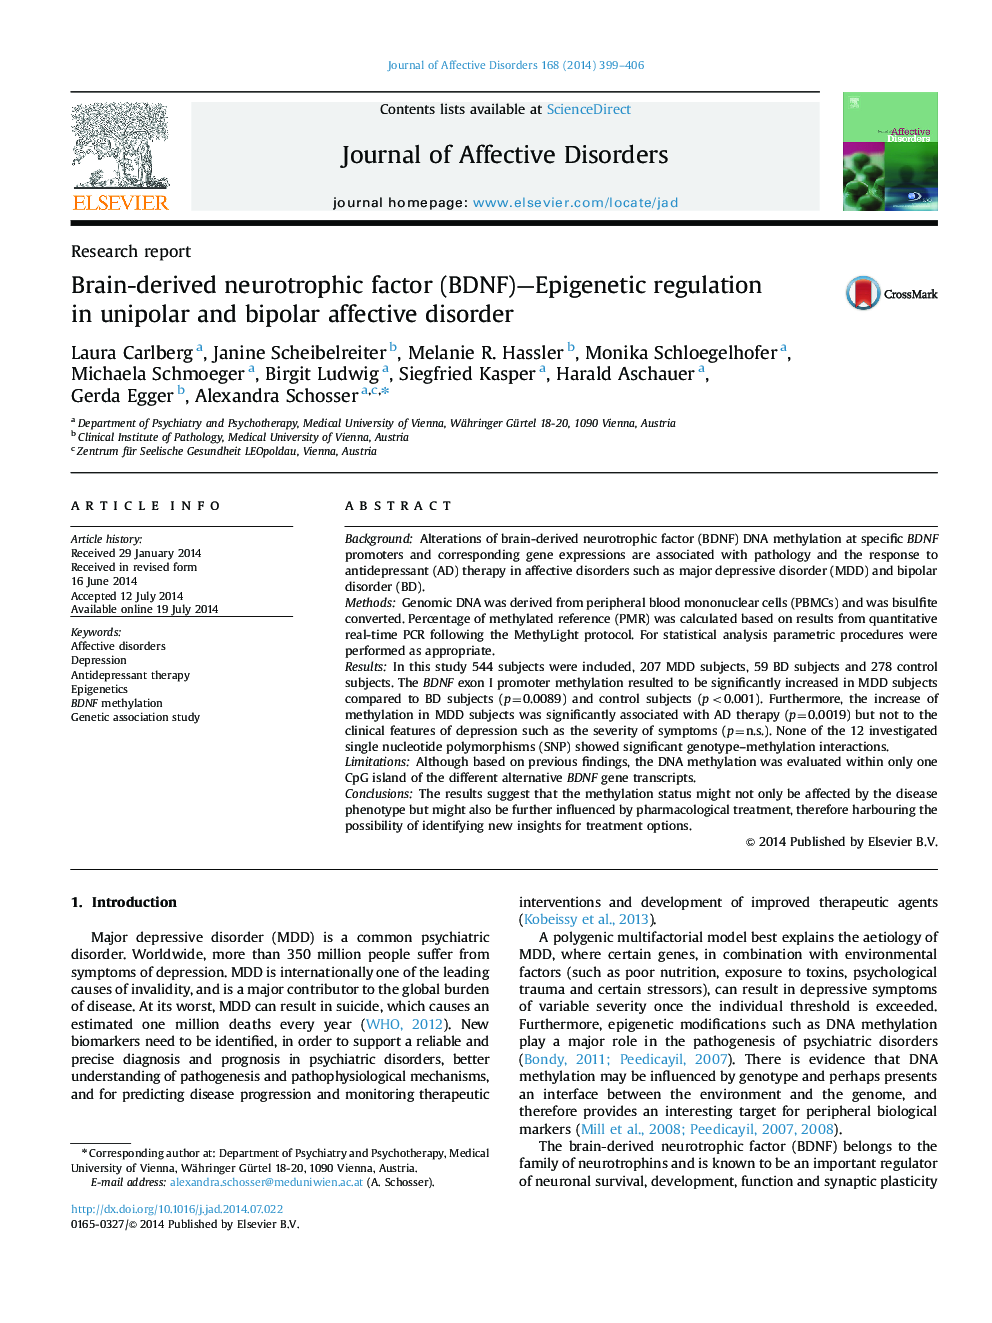 Brain-derived neurotrophic factor (BDNF)-Epigenetic regulation in unipolar and bipolar affective disorder